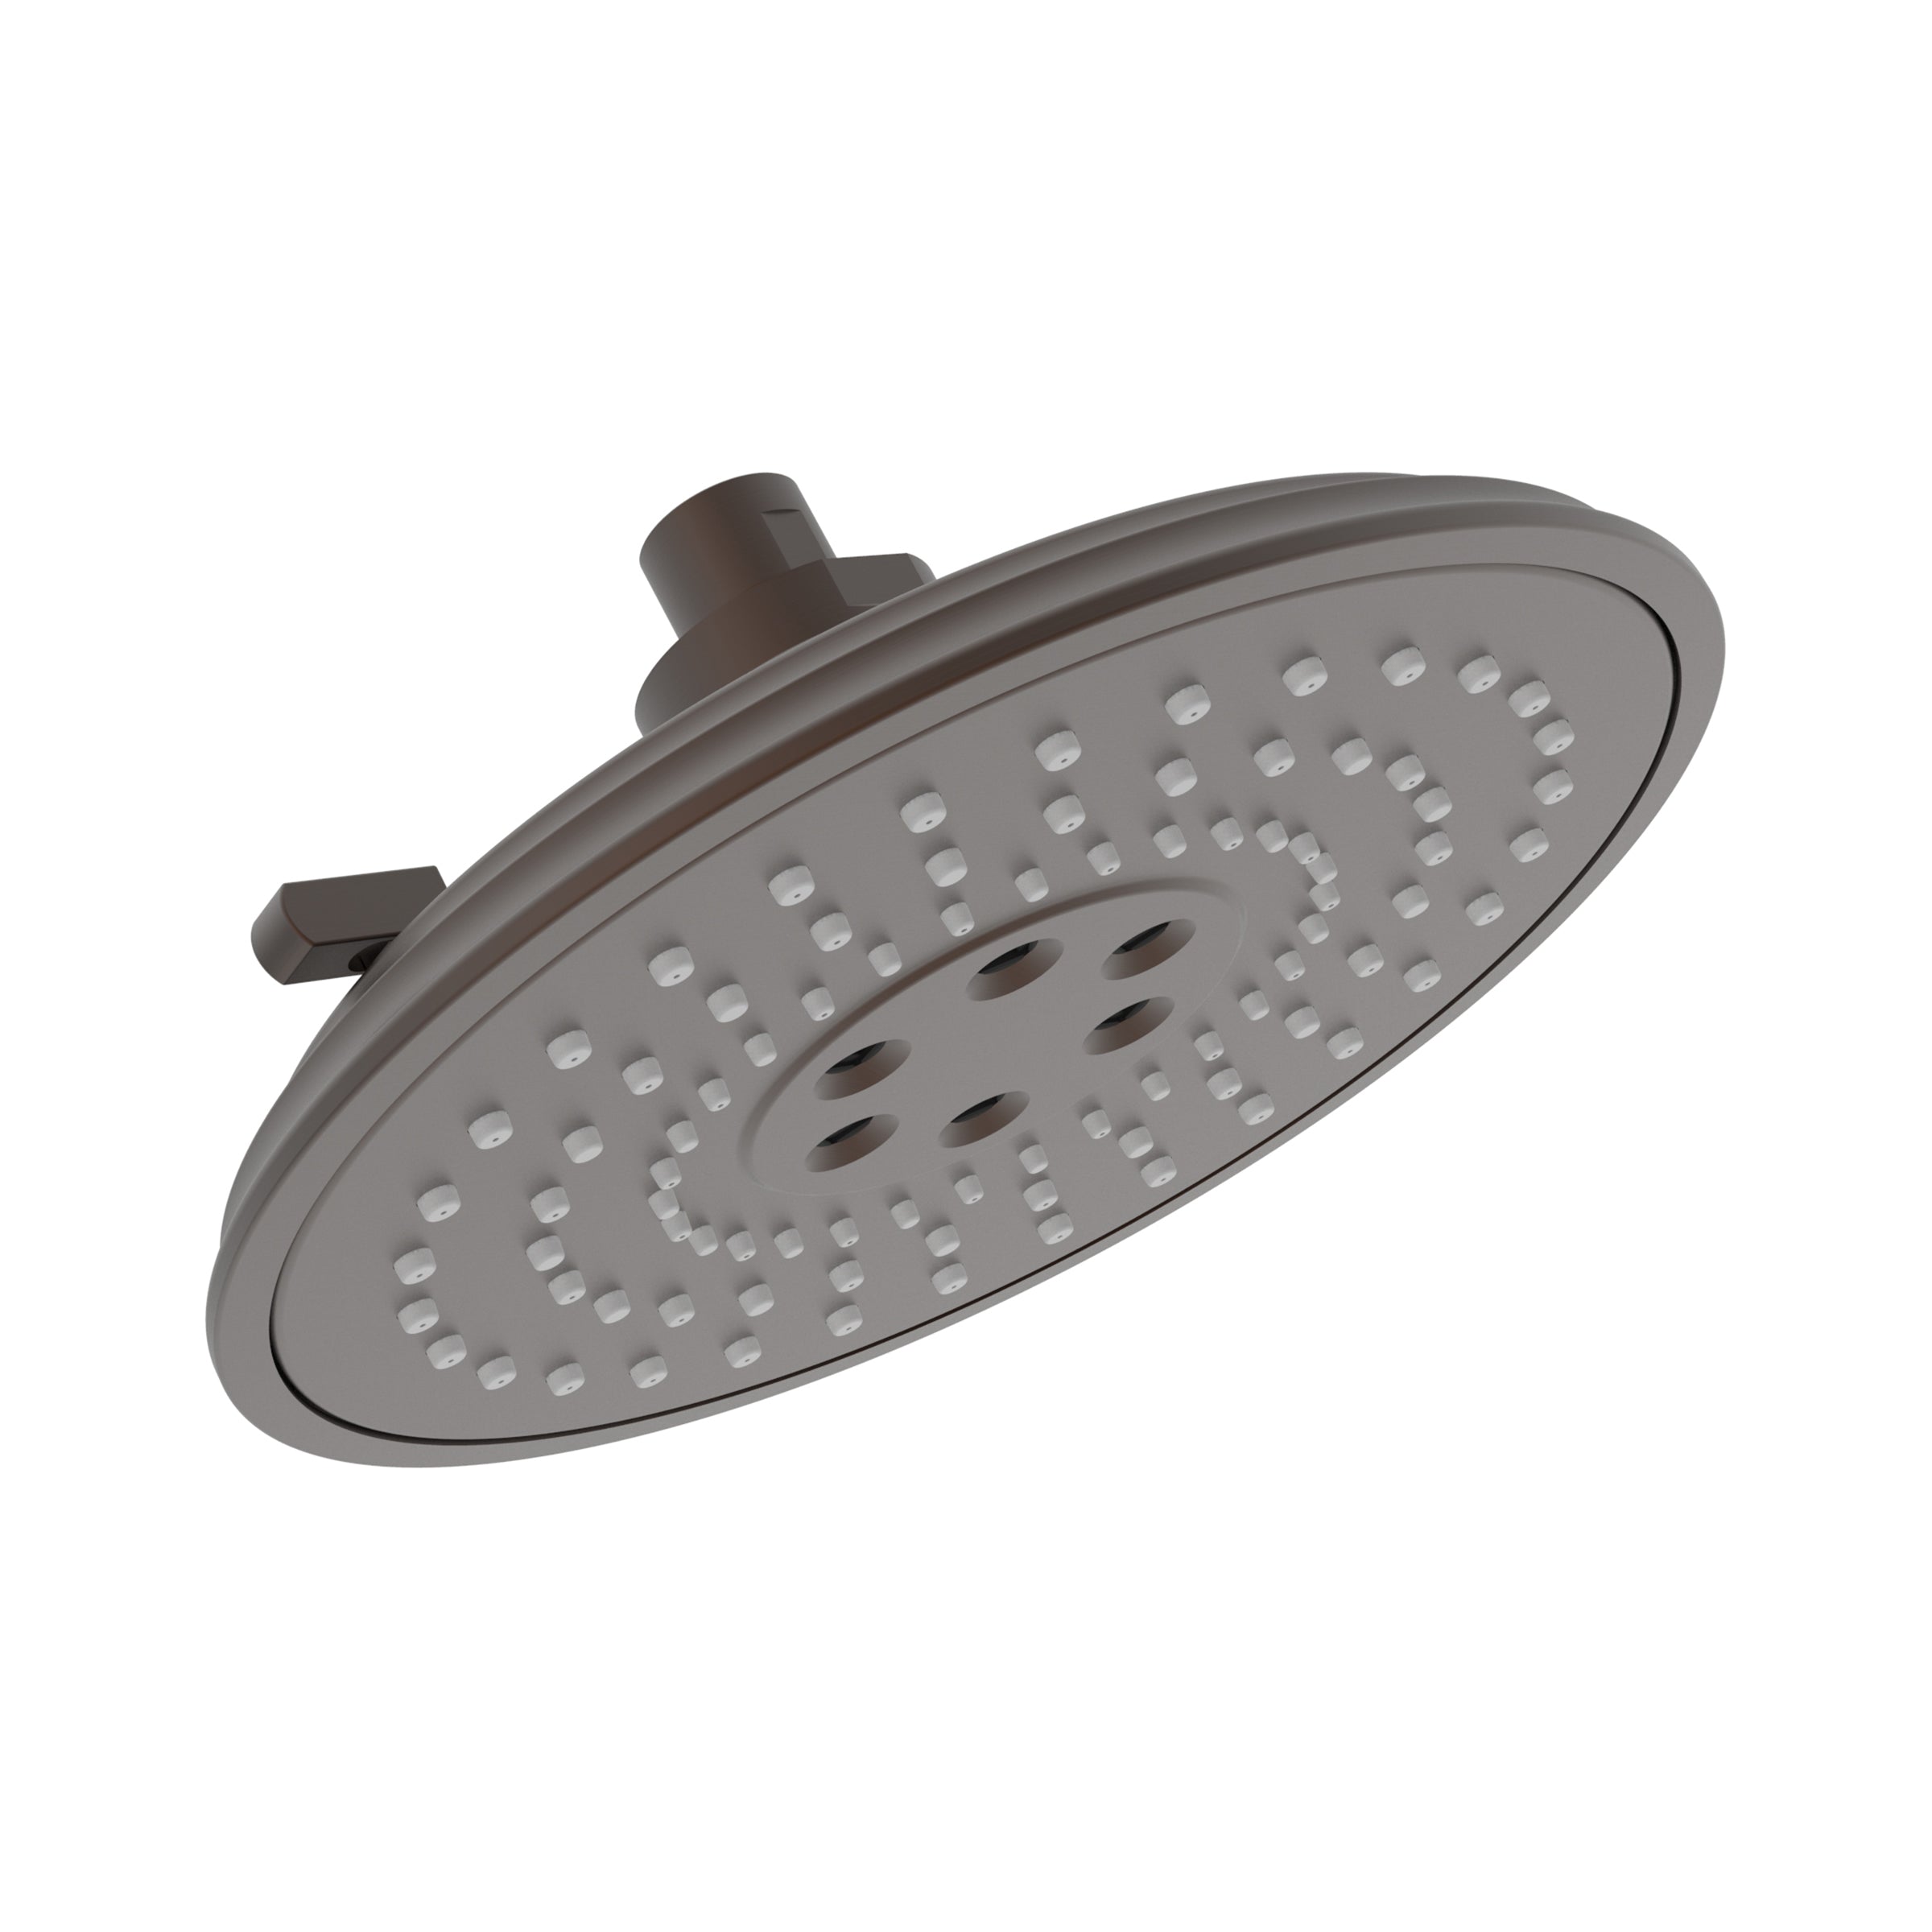 Newport Brass Tub & Shower Luxnetic Multifunction Showerhead